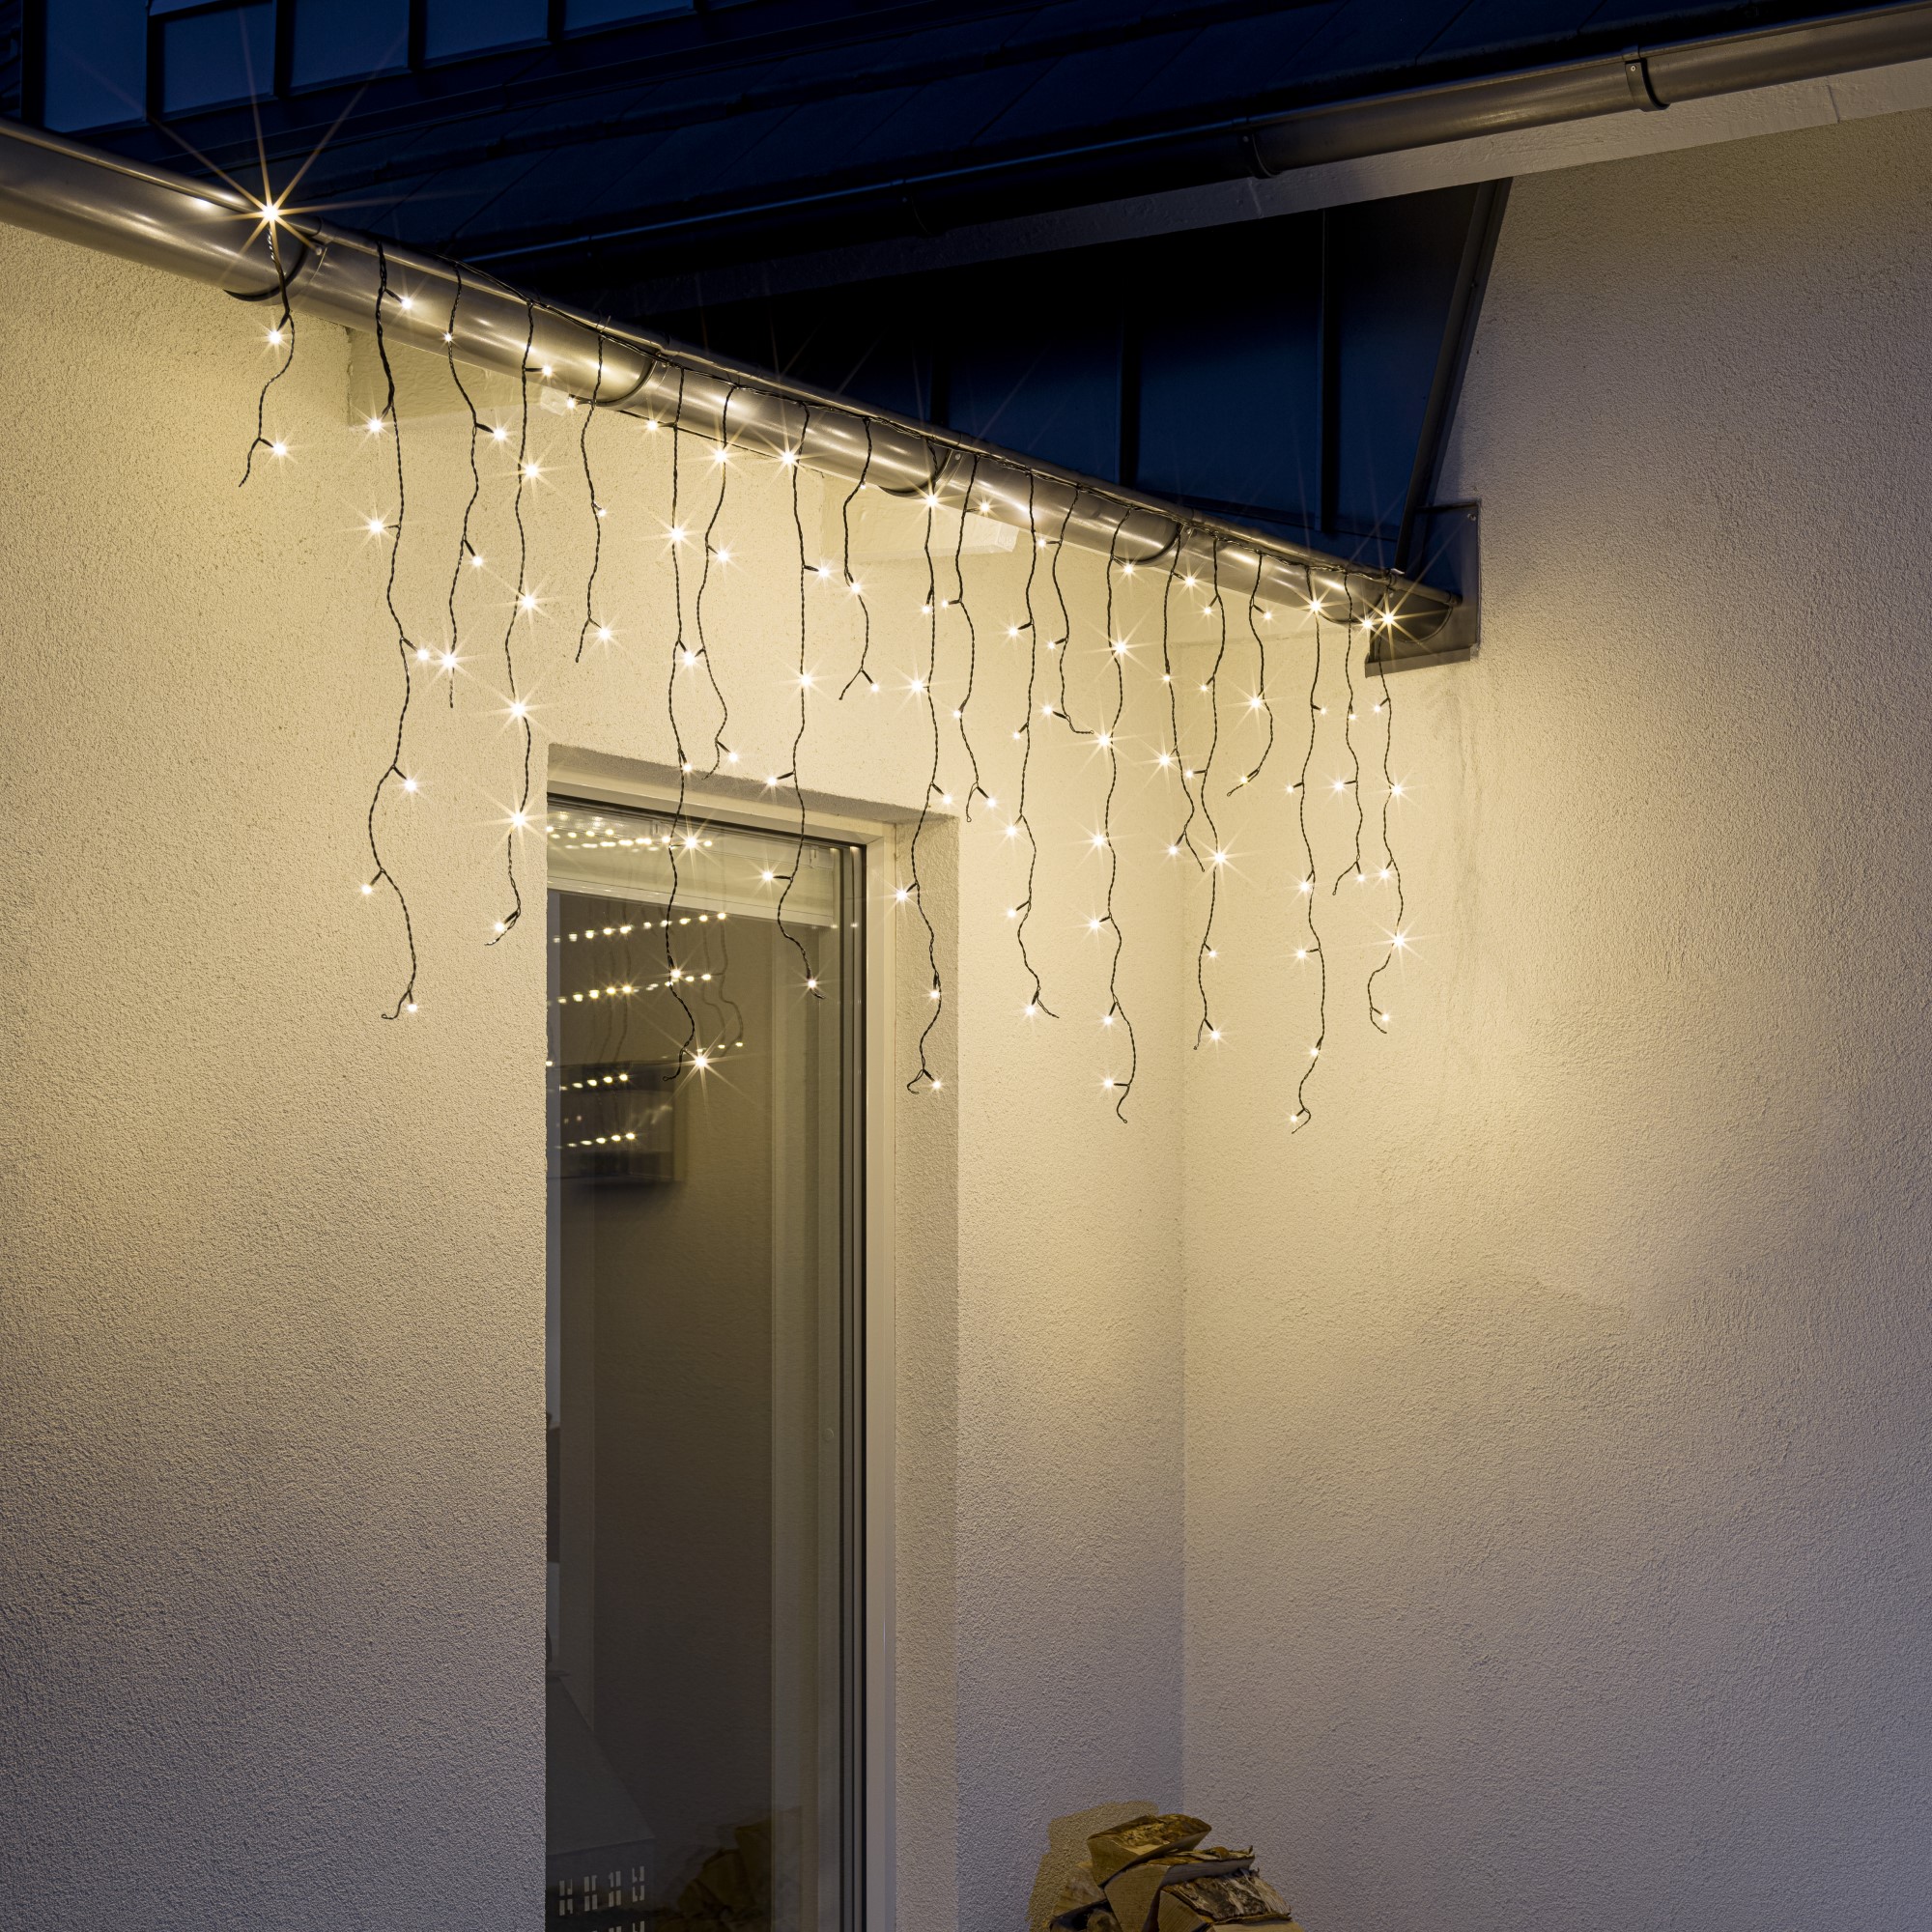 Konstsmide LED System 31V, LED Ice Rain Light Curtain frosted, 100 amber LEDs, IP44